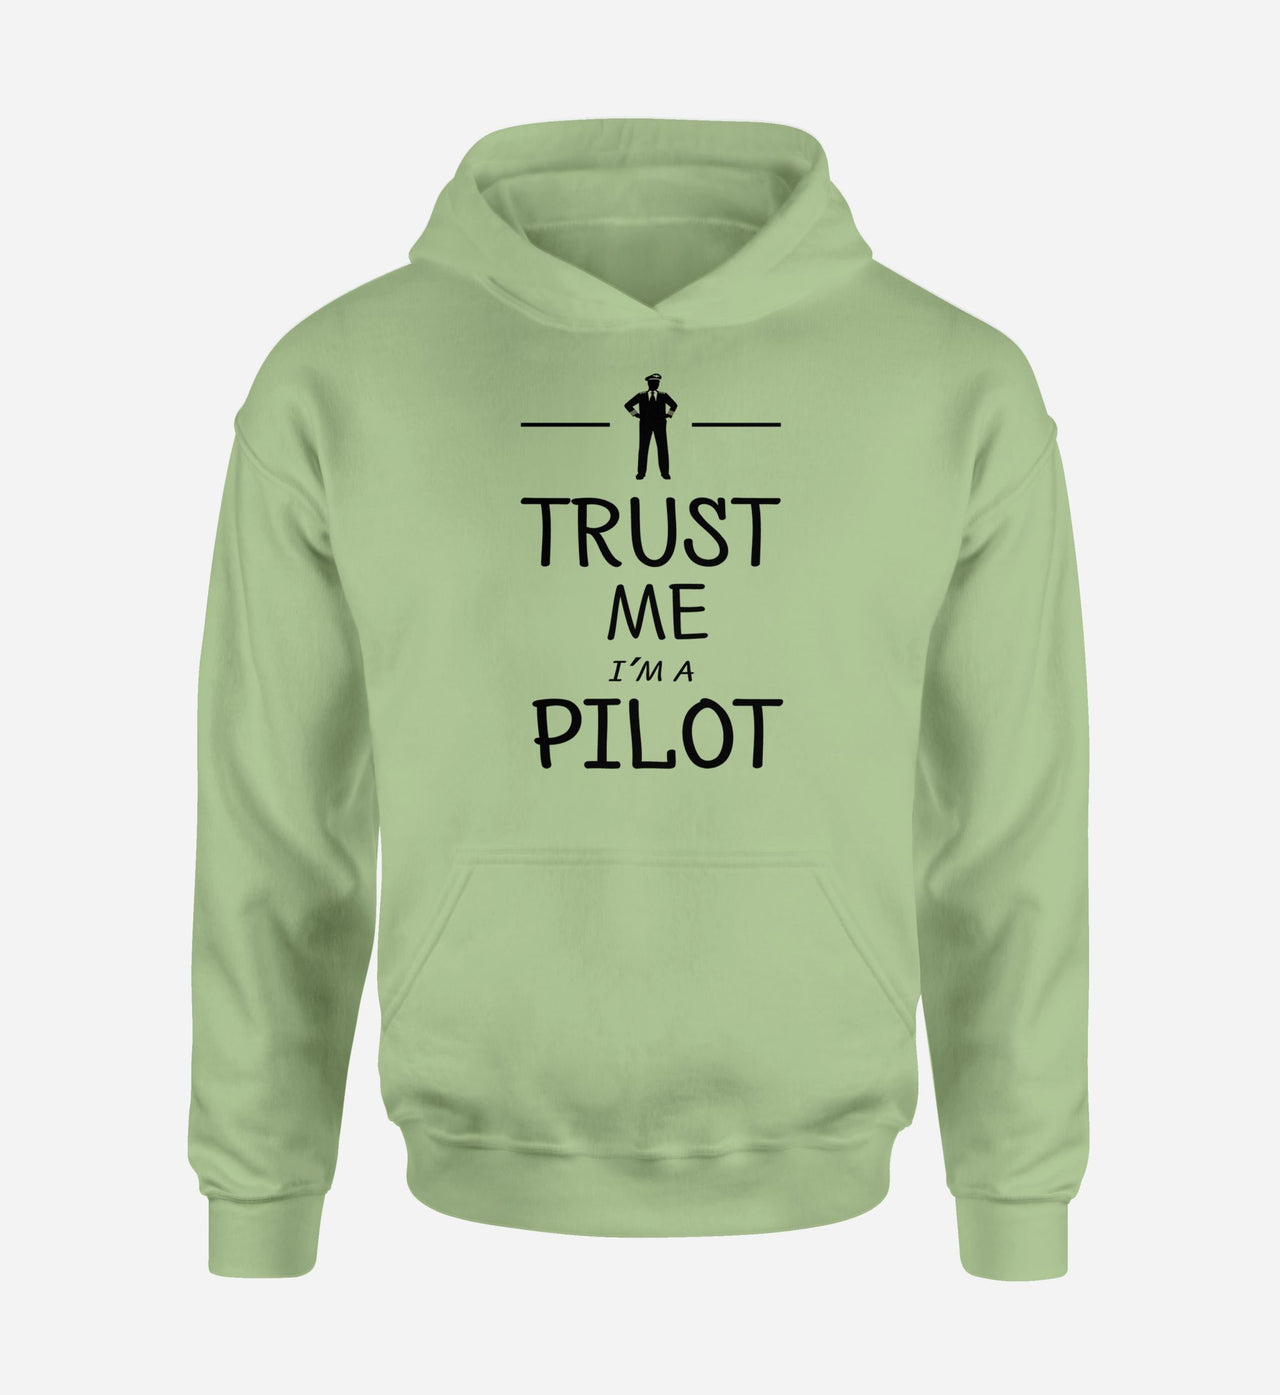 Trust Me I'm a Pilot Designed Hoodies